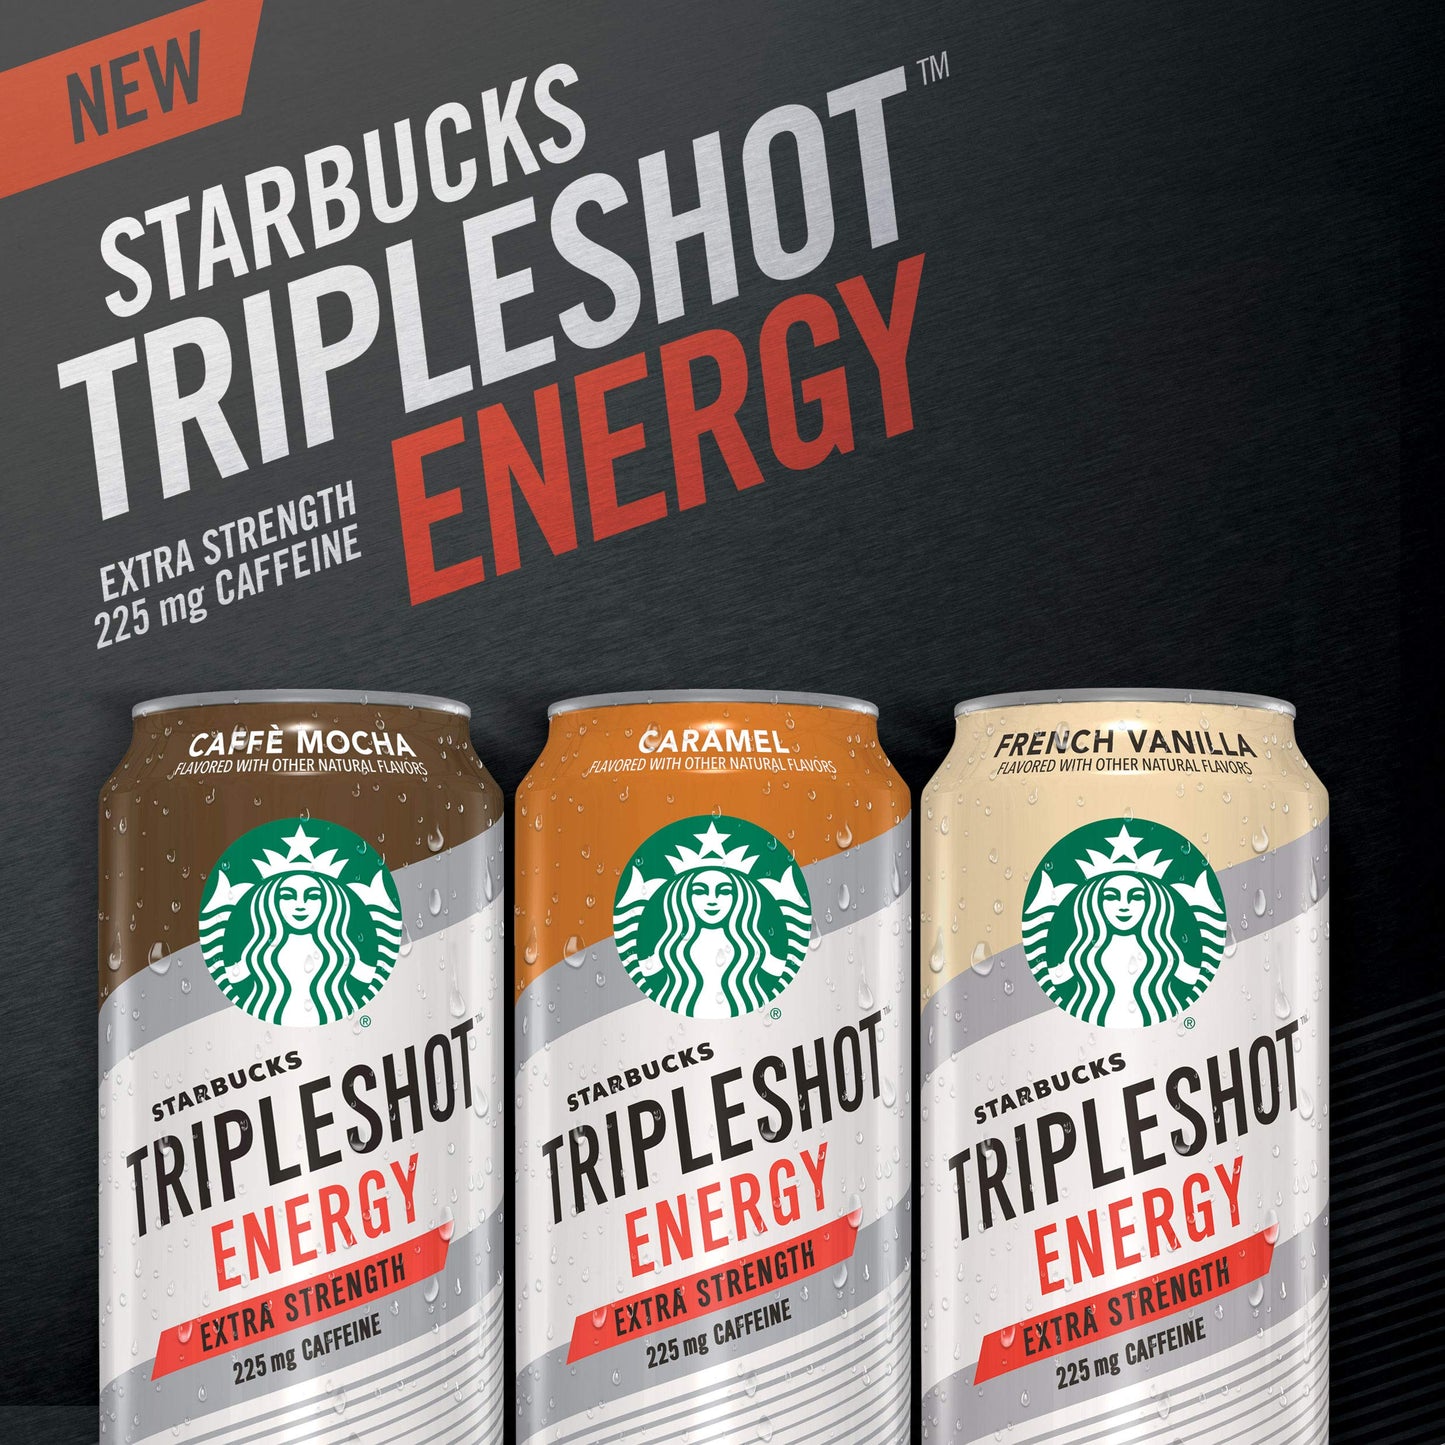 Starbucks Tripleshot Energy Extra Strength Espresso Coffee Beverage, French Vanilla, 225mg Caffeine, 15 oz cans (12 Pack)